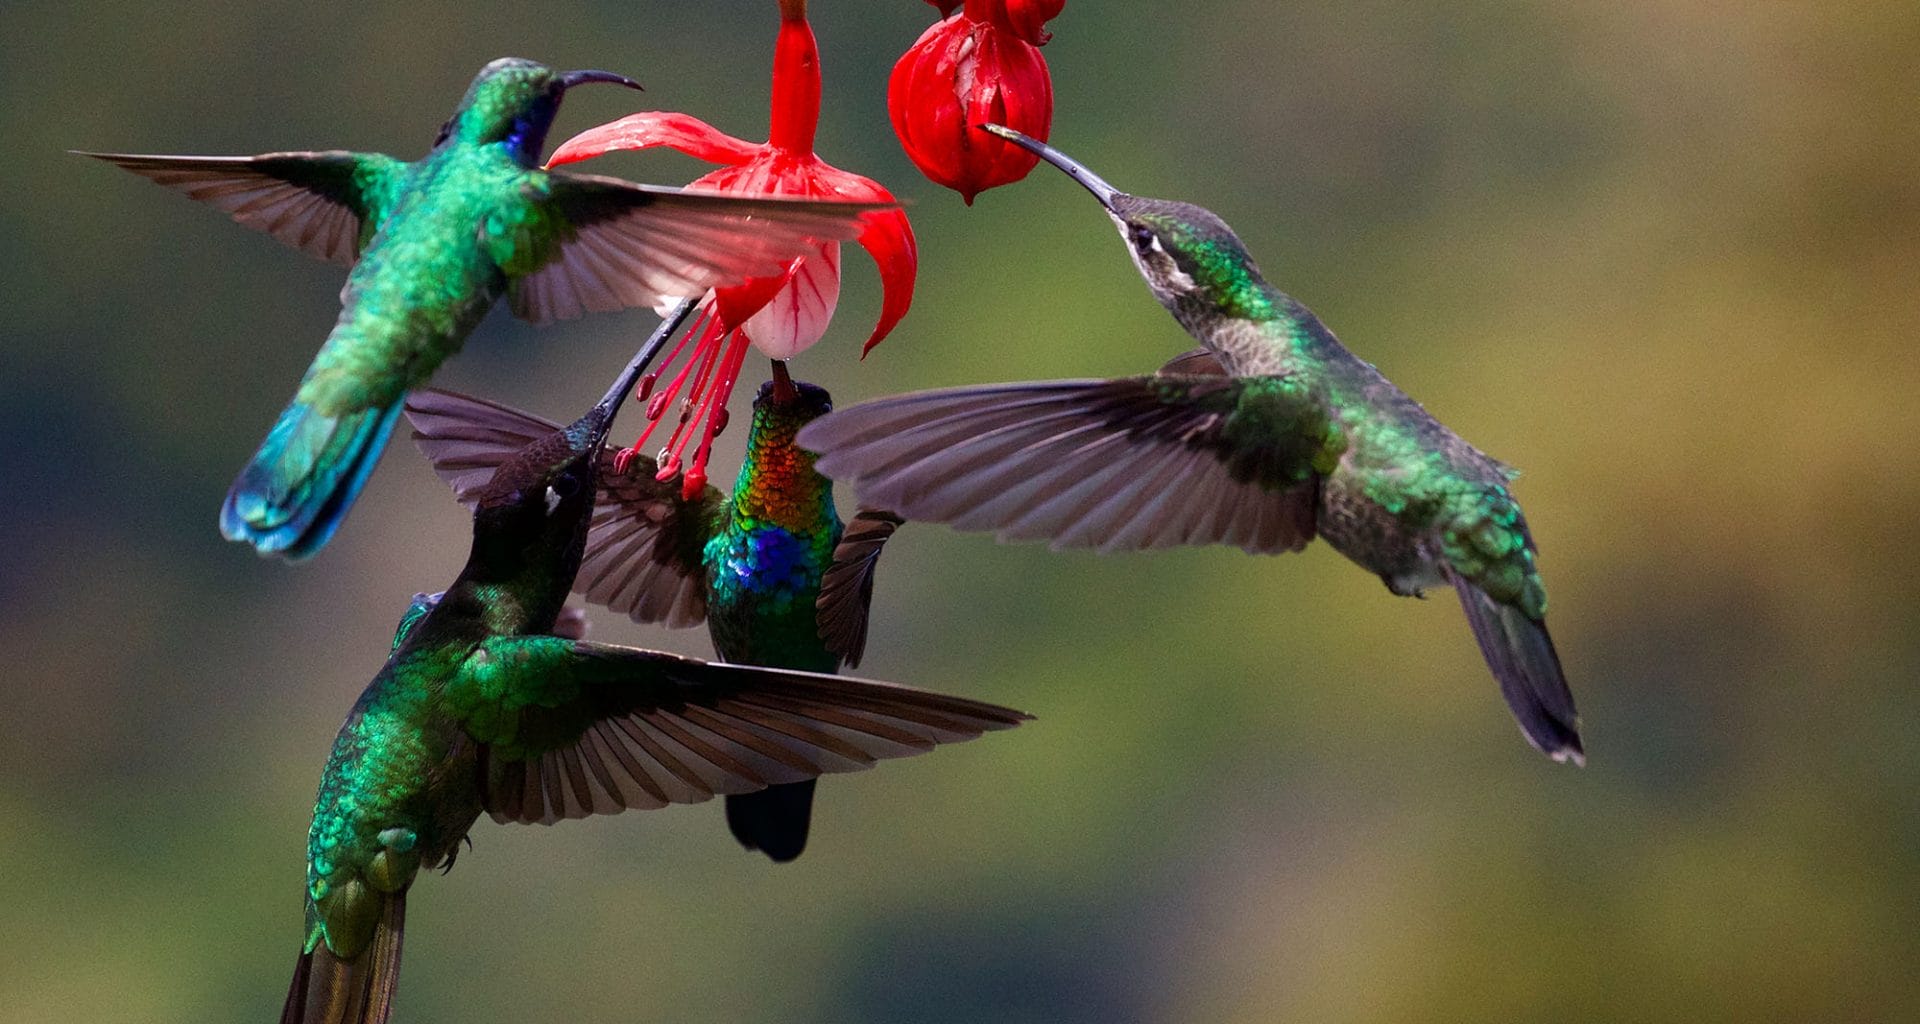 when is nesting season for hummingbirds